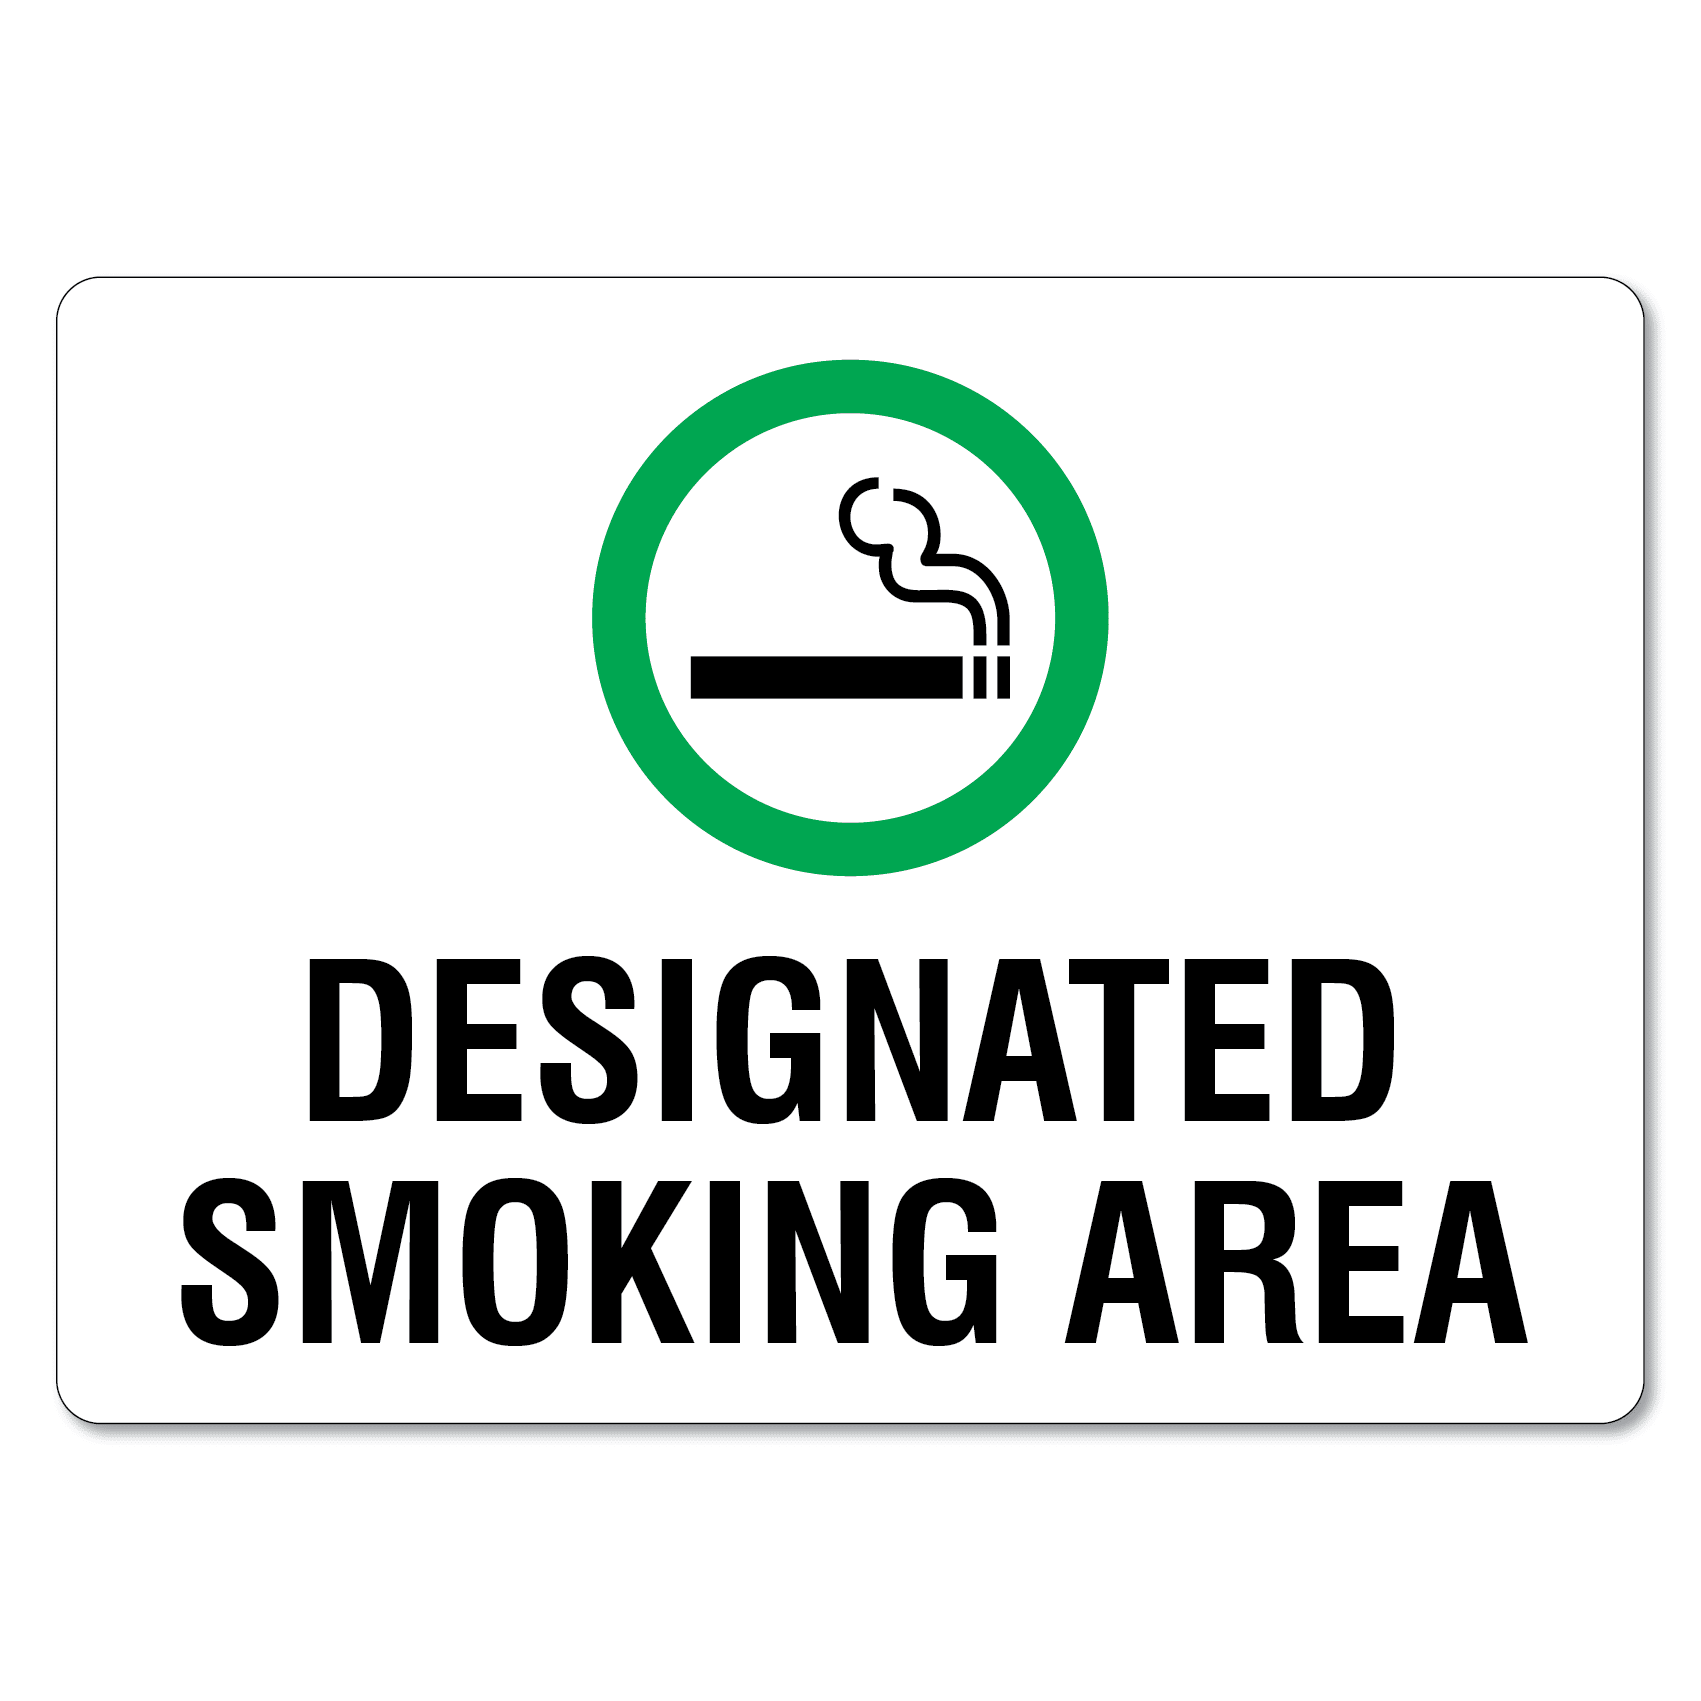 Designated Smoking Area Sign - The Signmaker